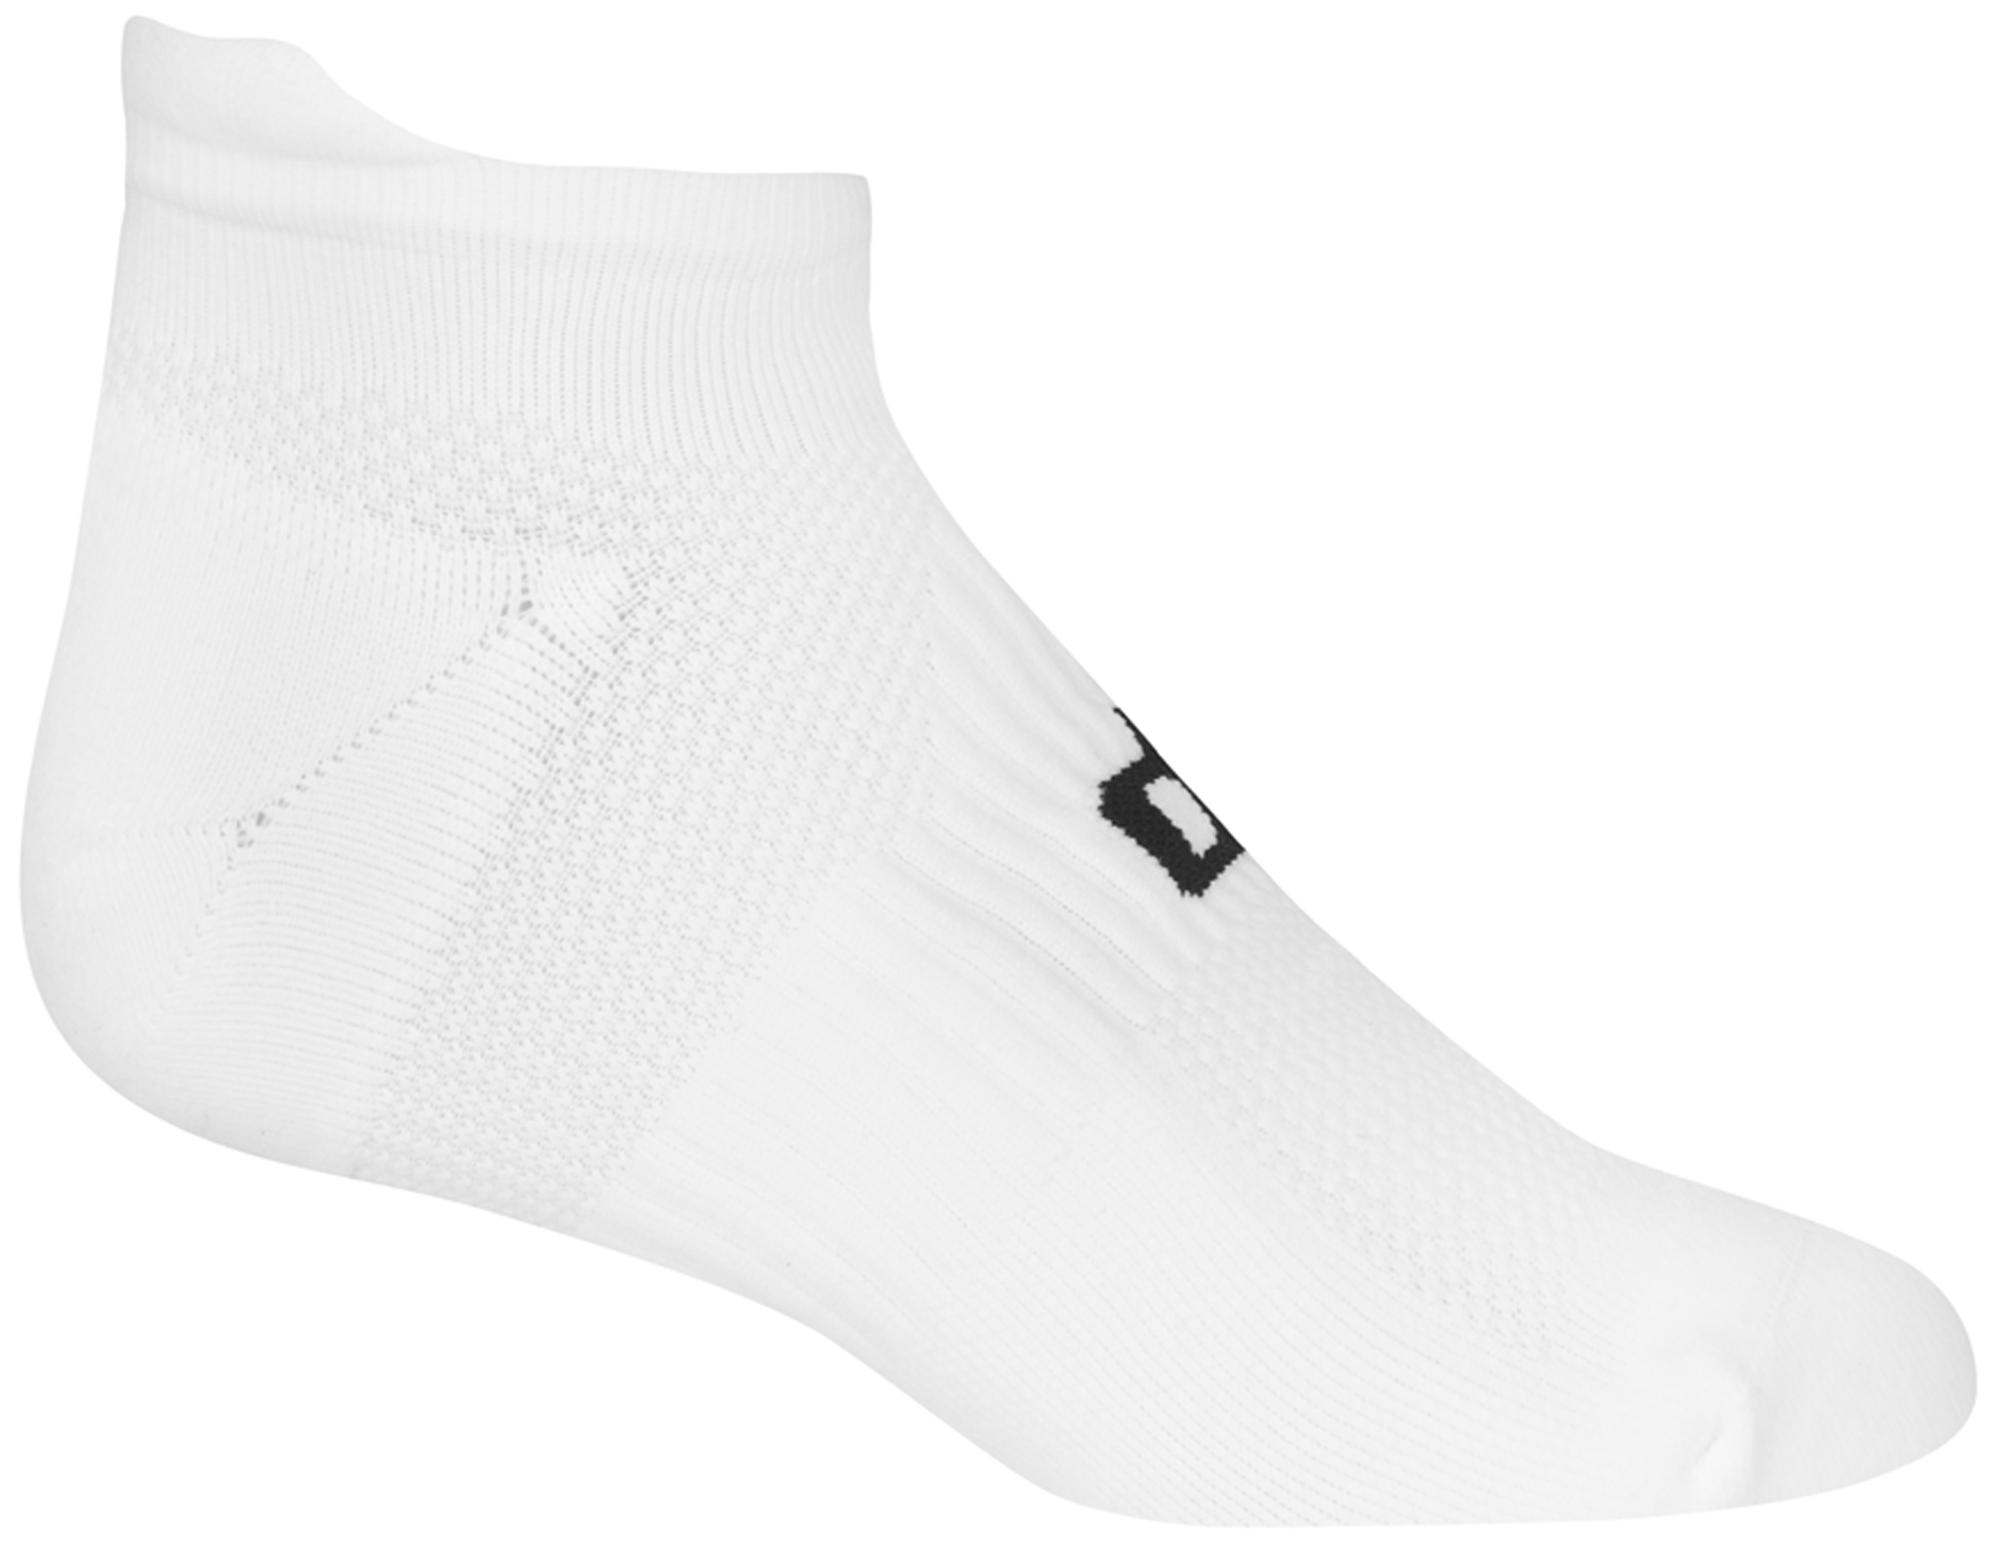 Dhb Low Cut Running Sock - White